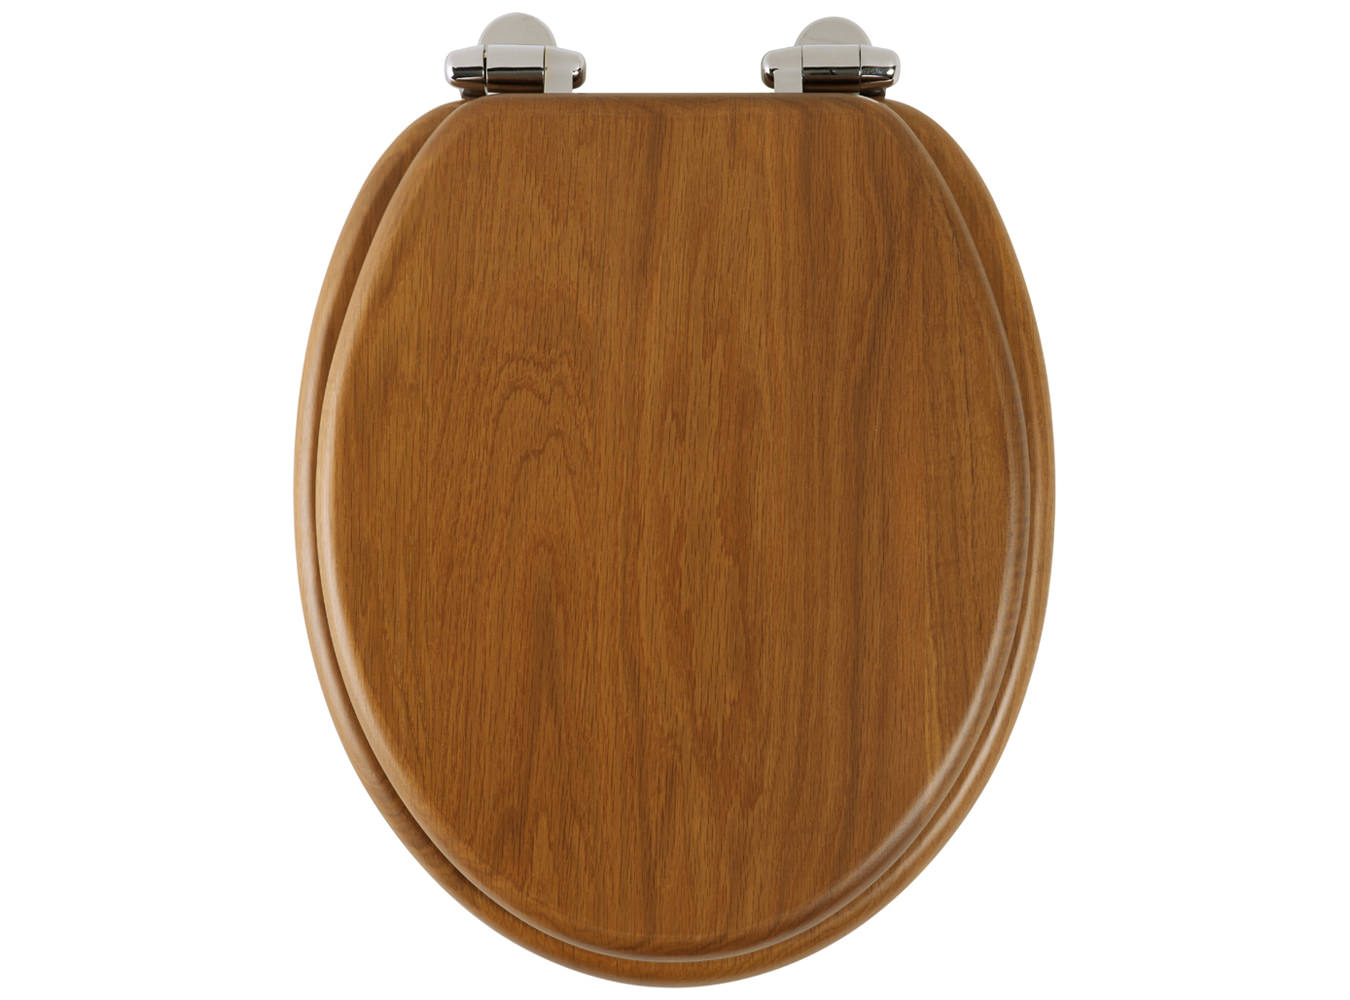 Roper Rhodes Traditional Honey Oak Solid Wood Toilet Seat | 8081HOSC